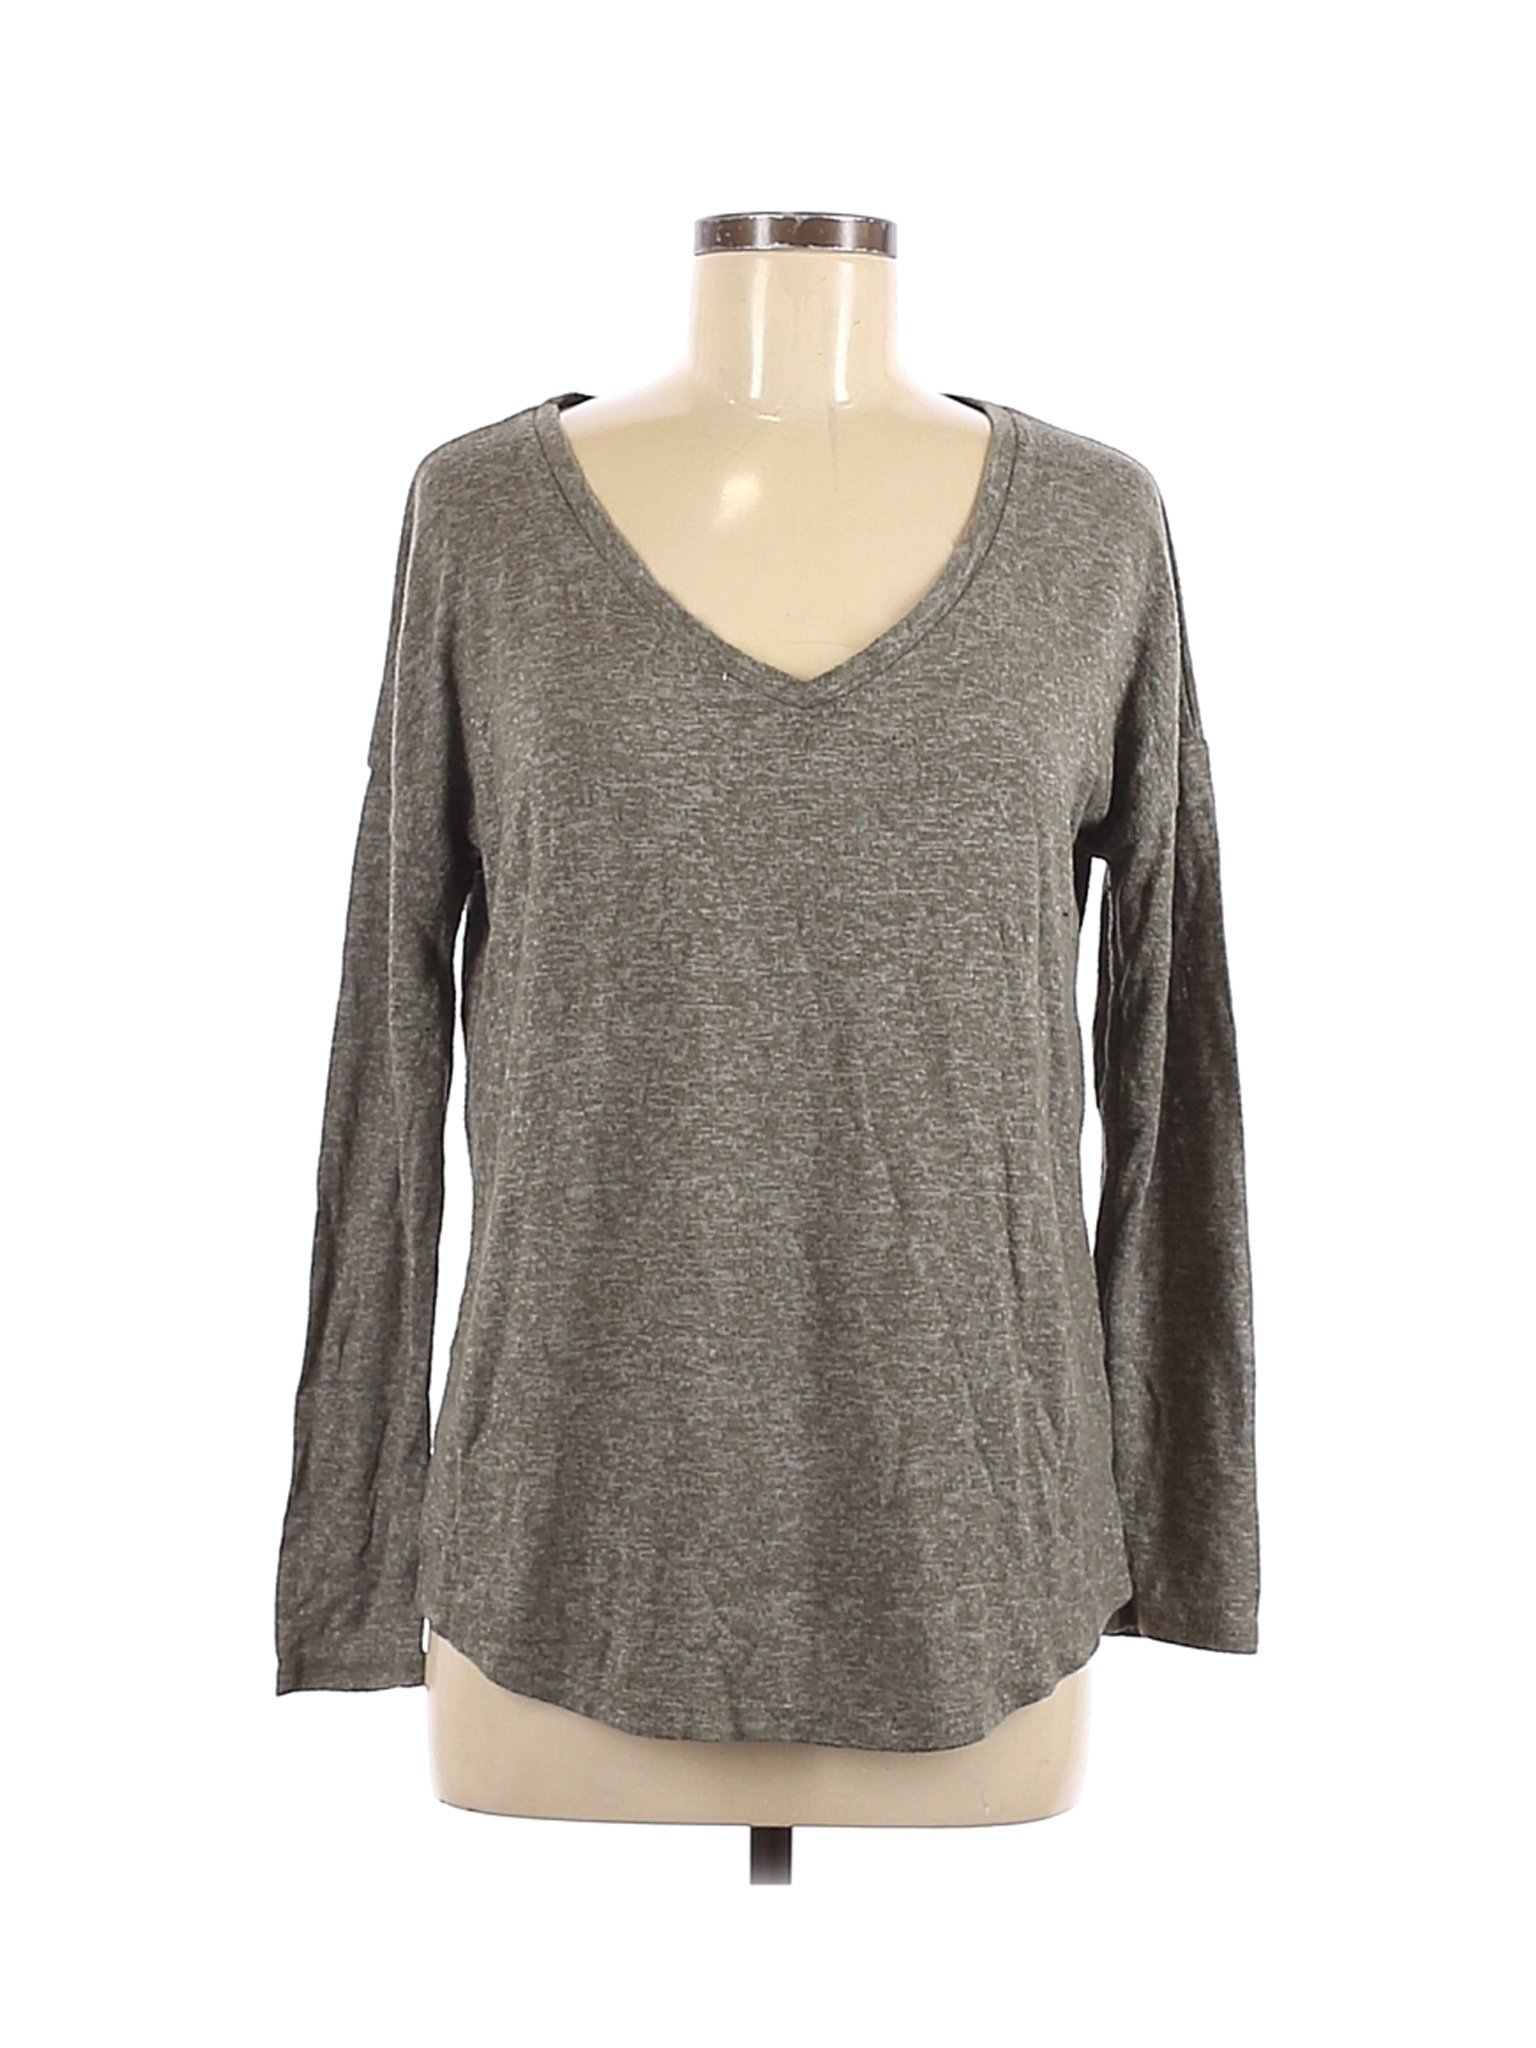 A New Day Women Gray Long Sleeve Top M | eBay